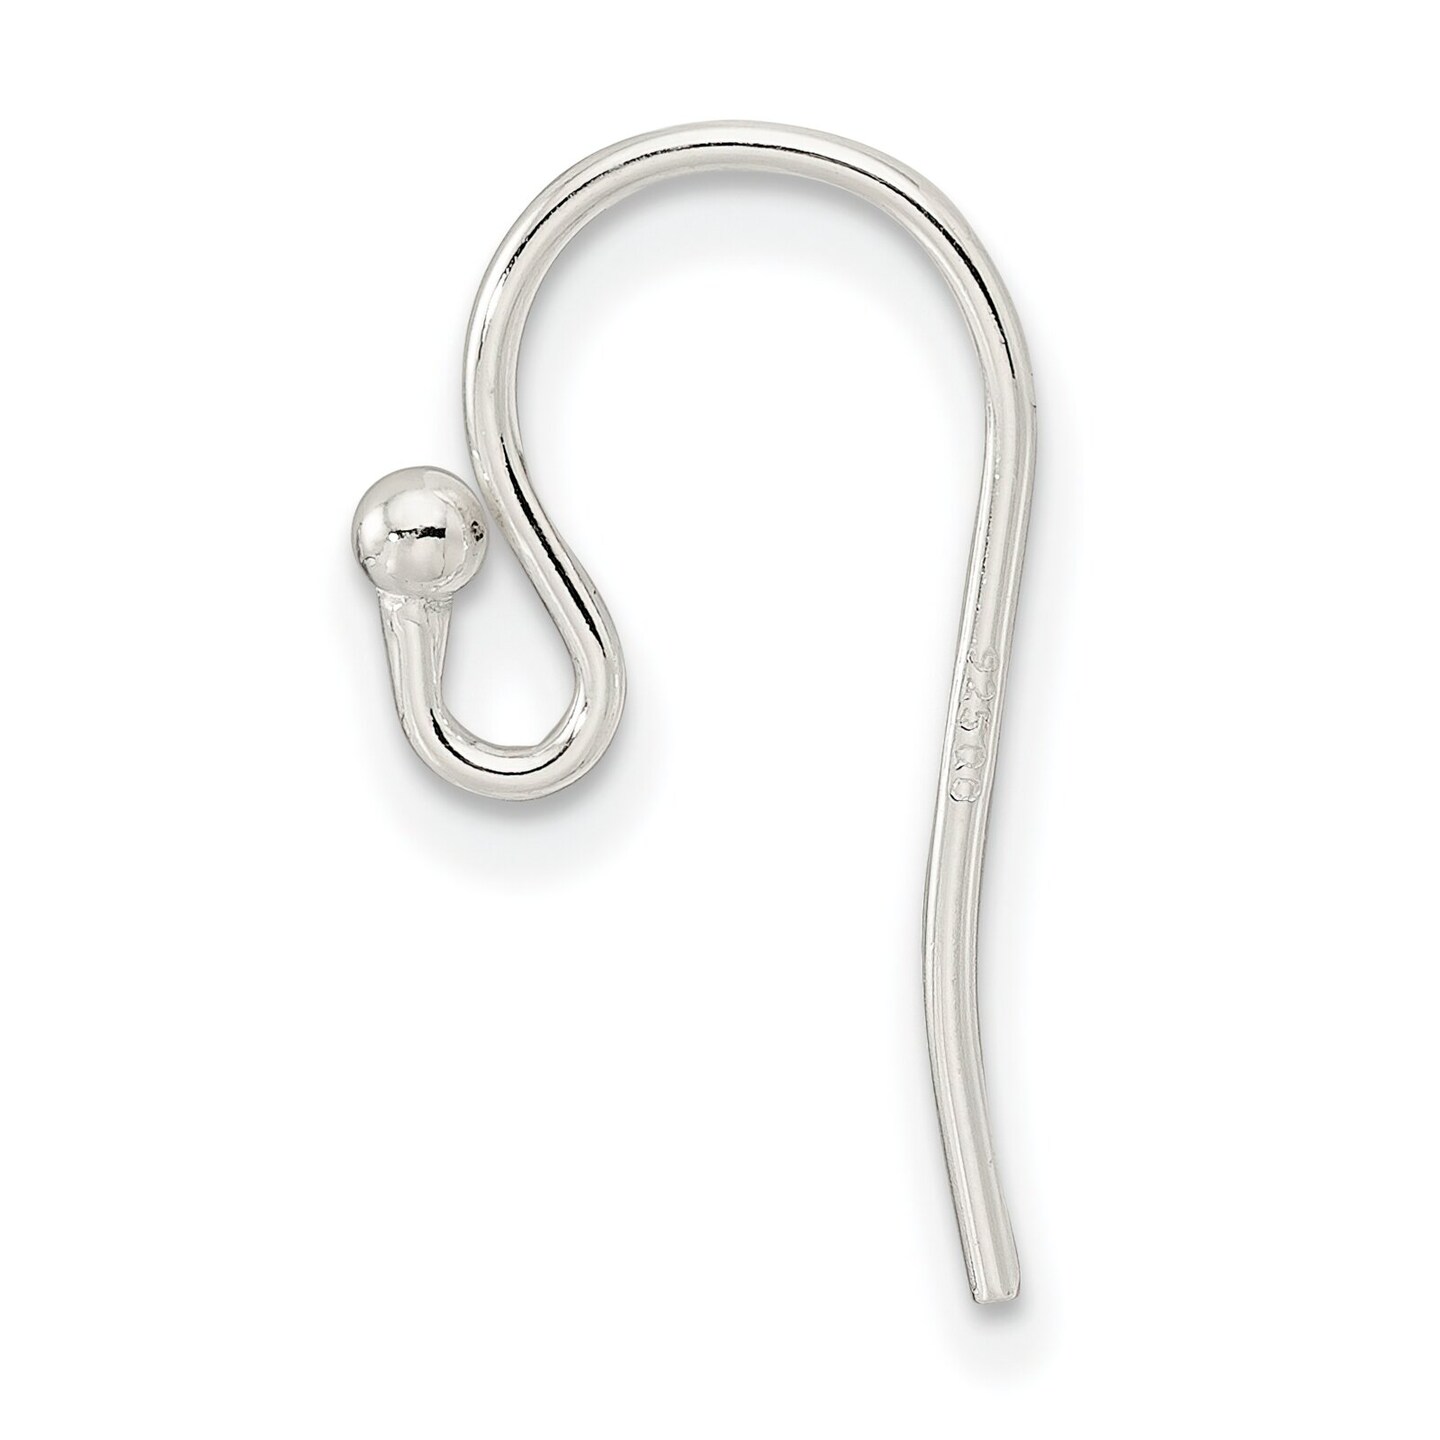 Premium Metals Rhodium Assorted Ear Wires by Bead Landing™